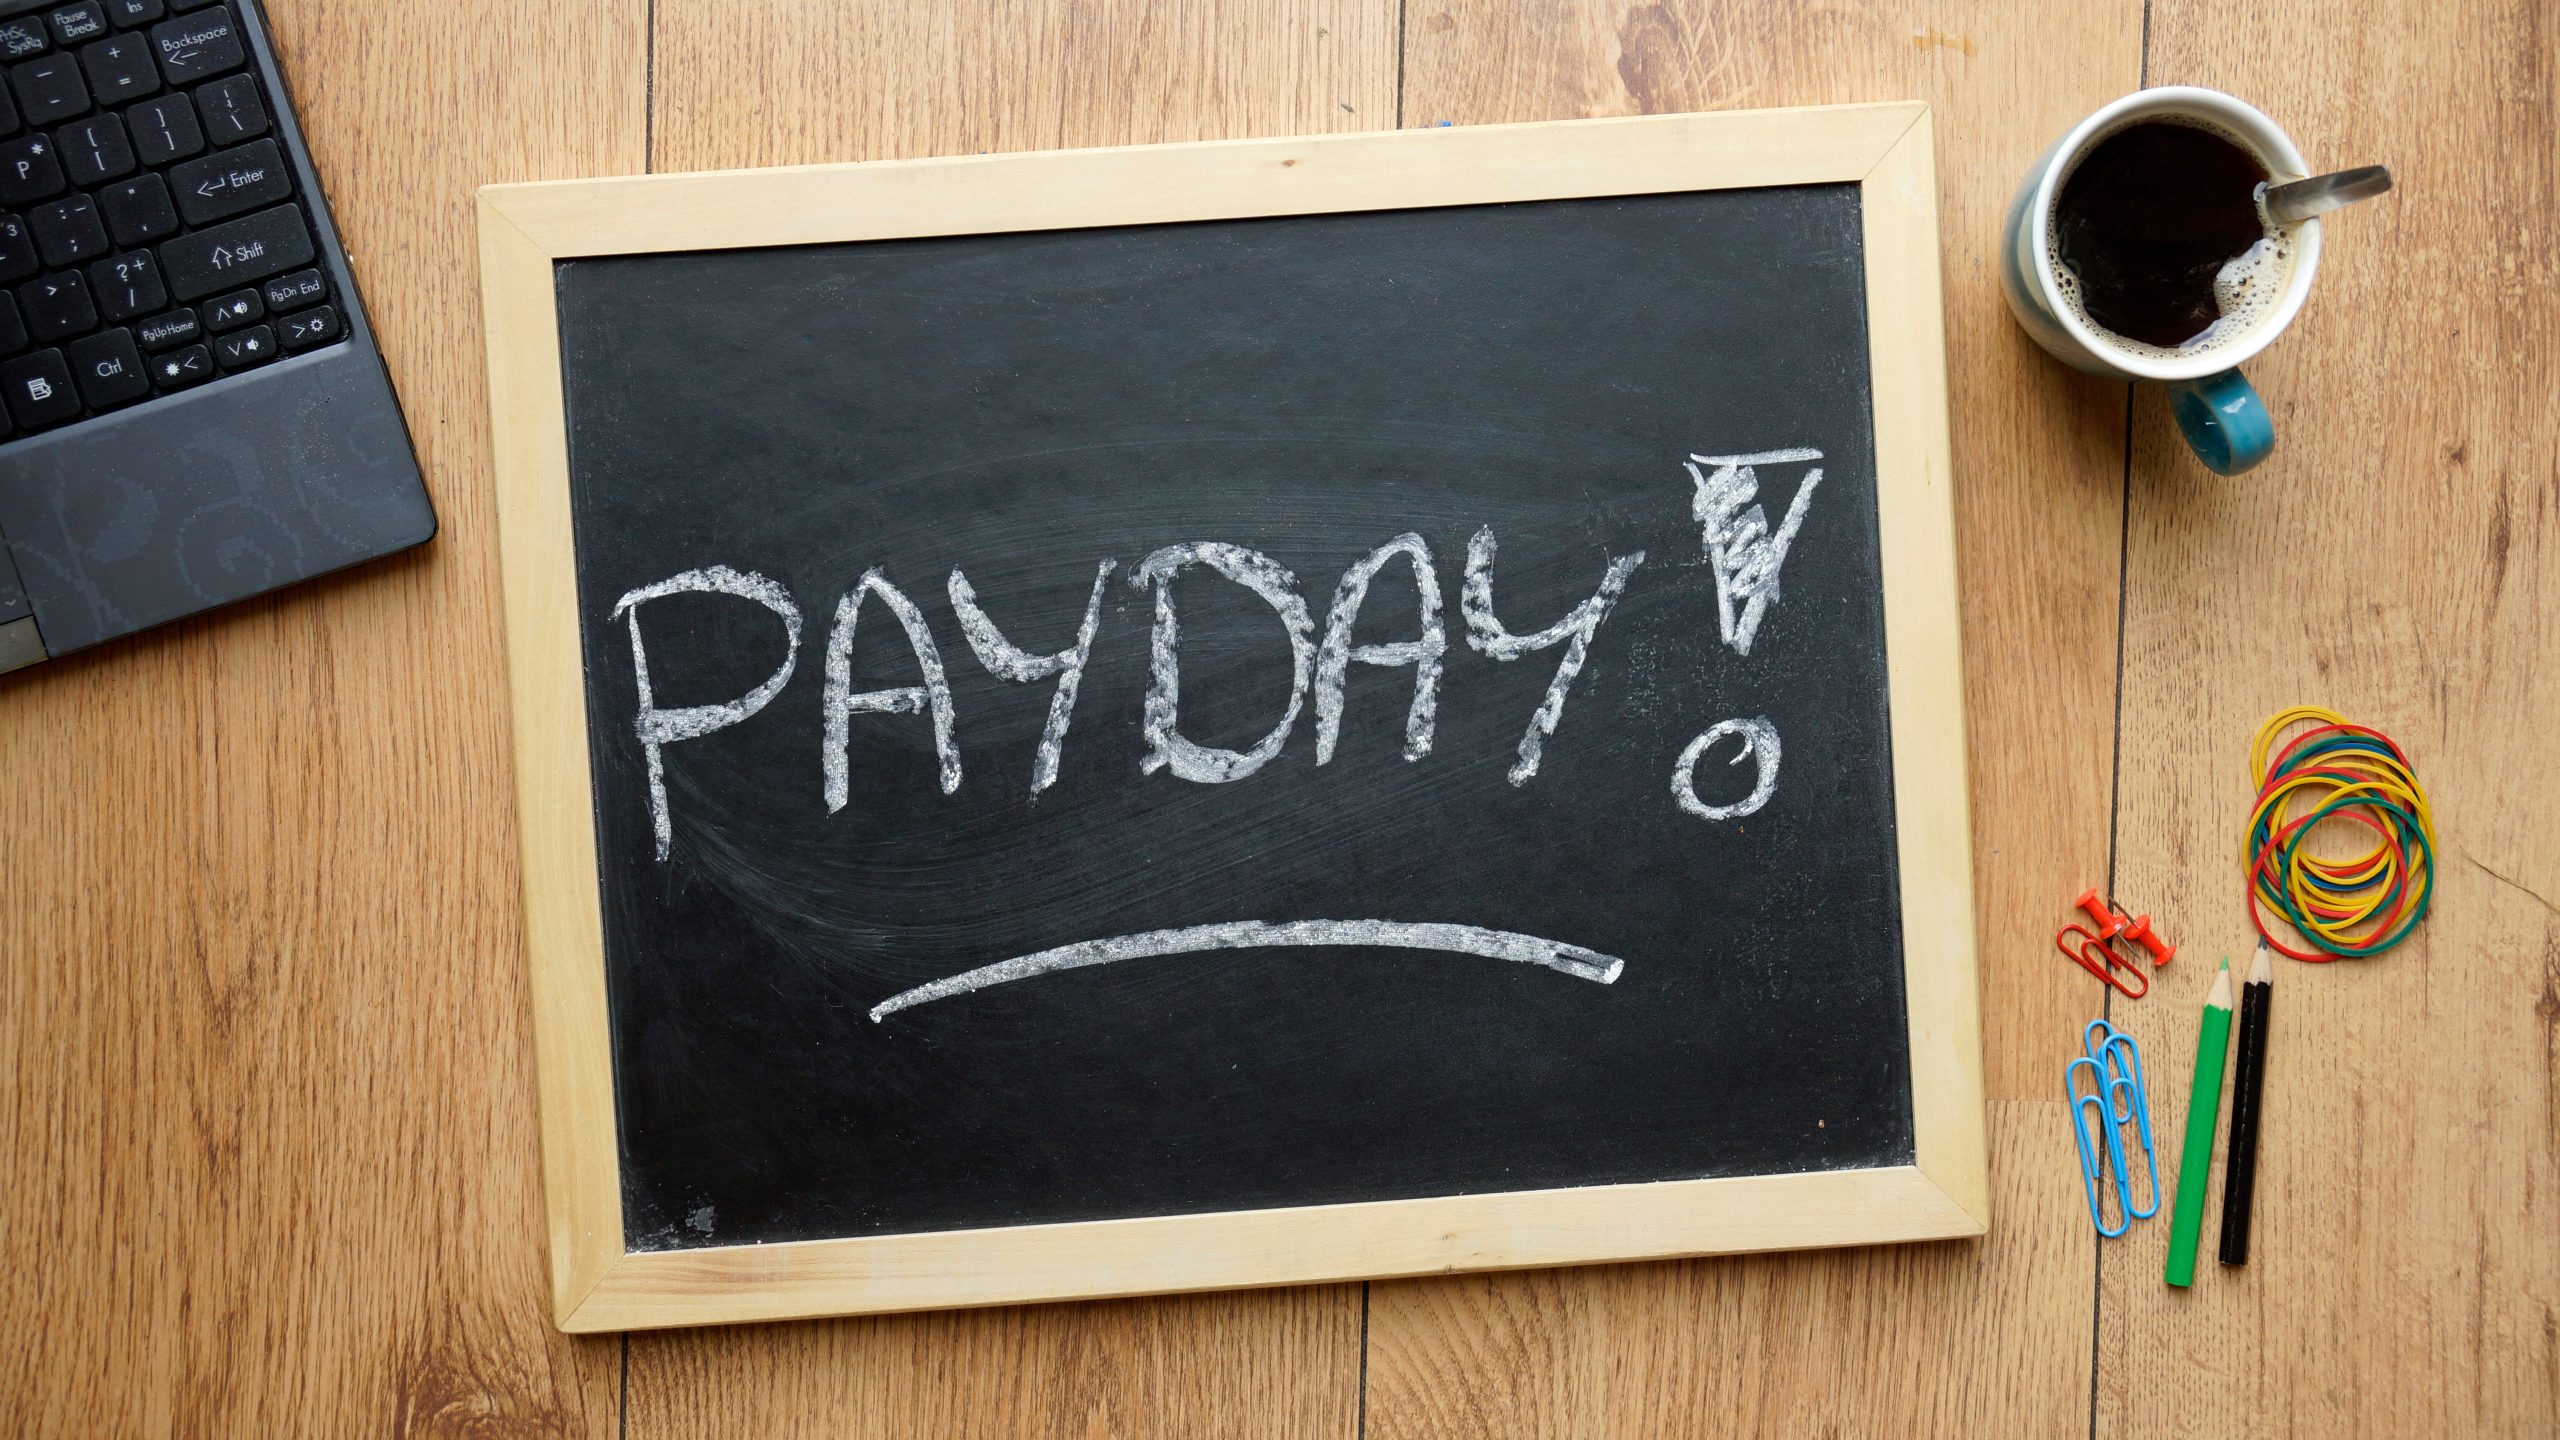 Payday image, chalkboard, reminder